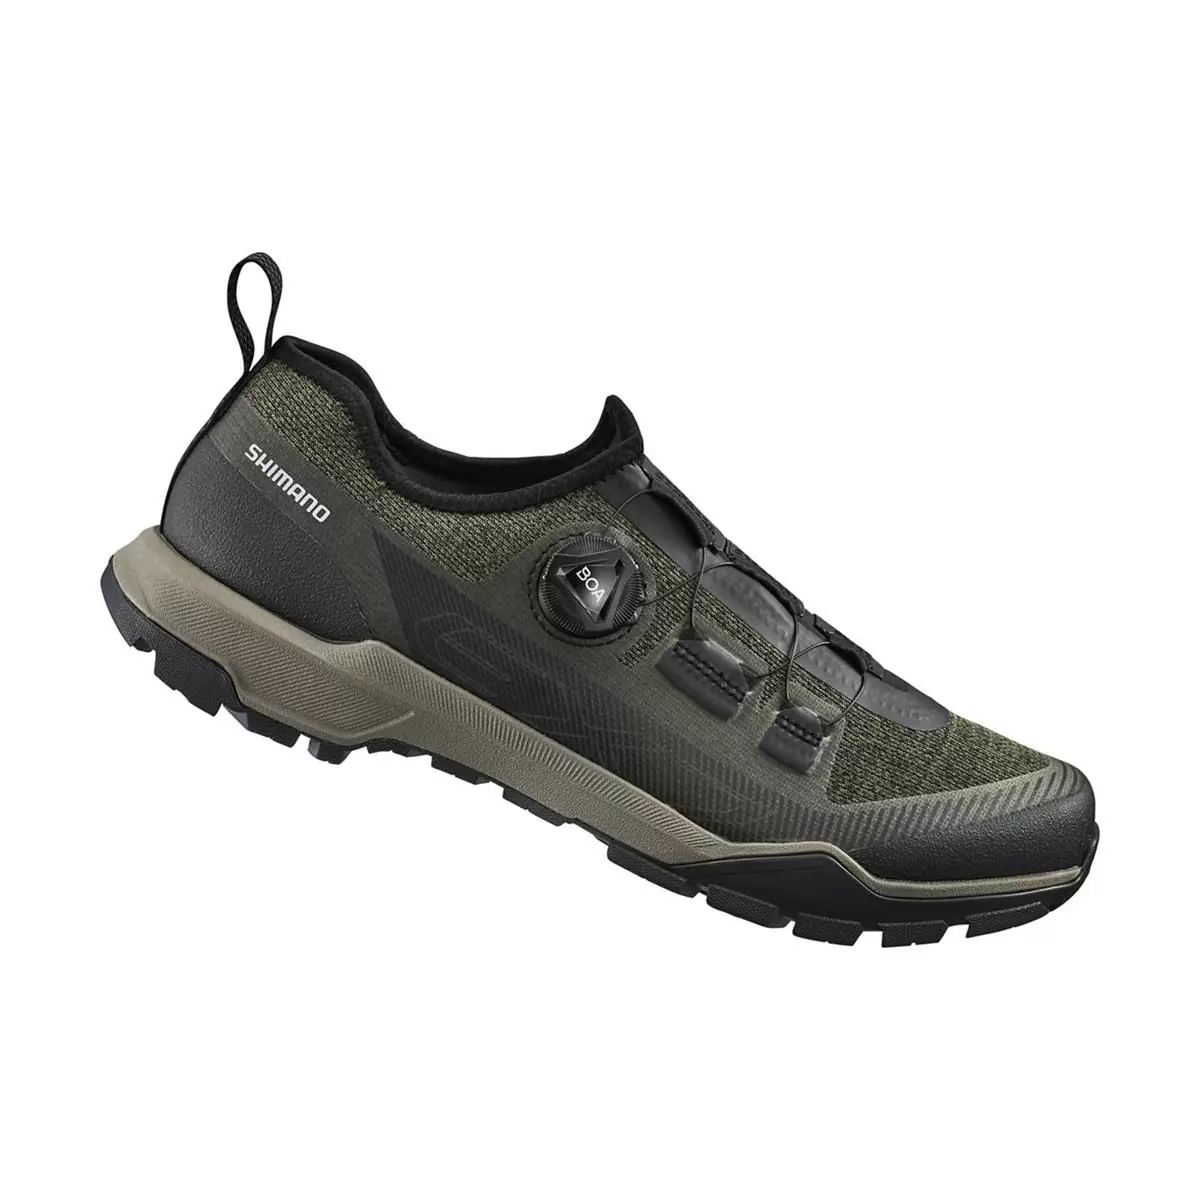 Trekking / MTB Shoes SH-EX700 Green Size 43 - image